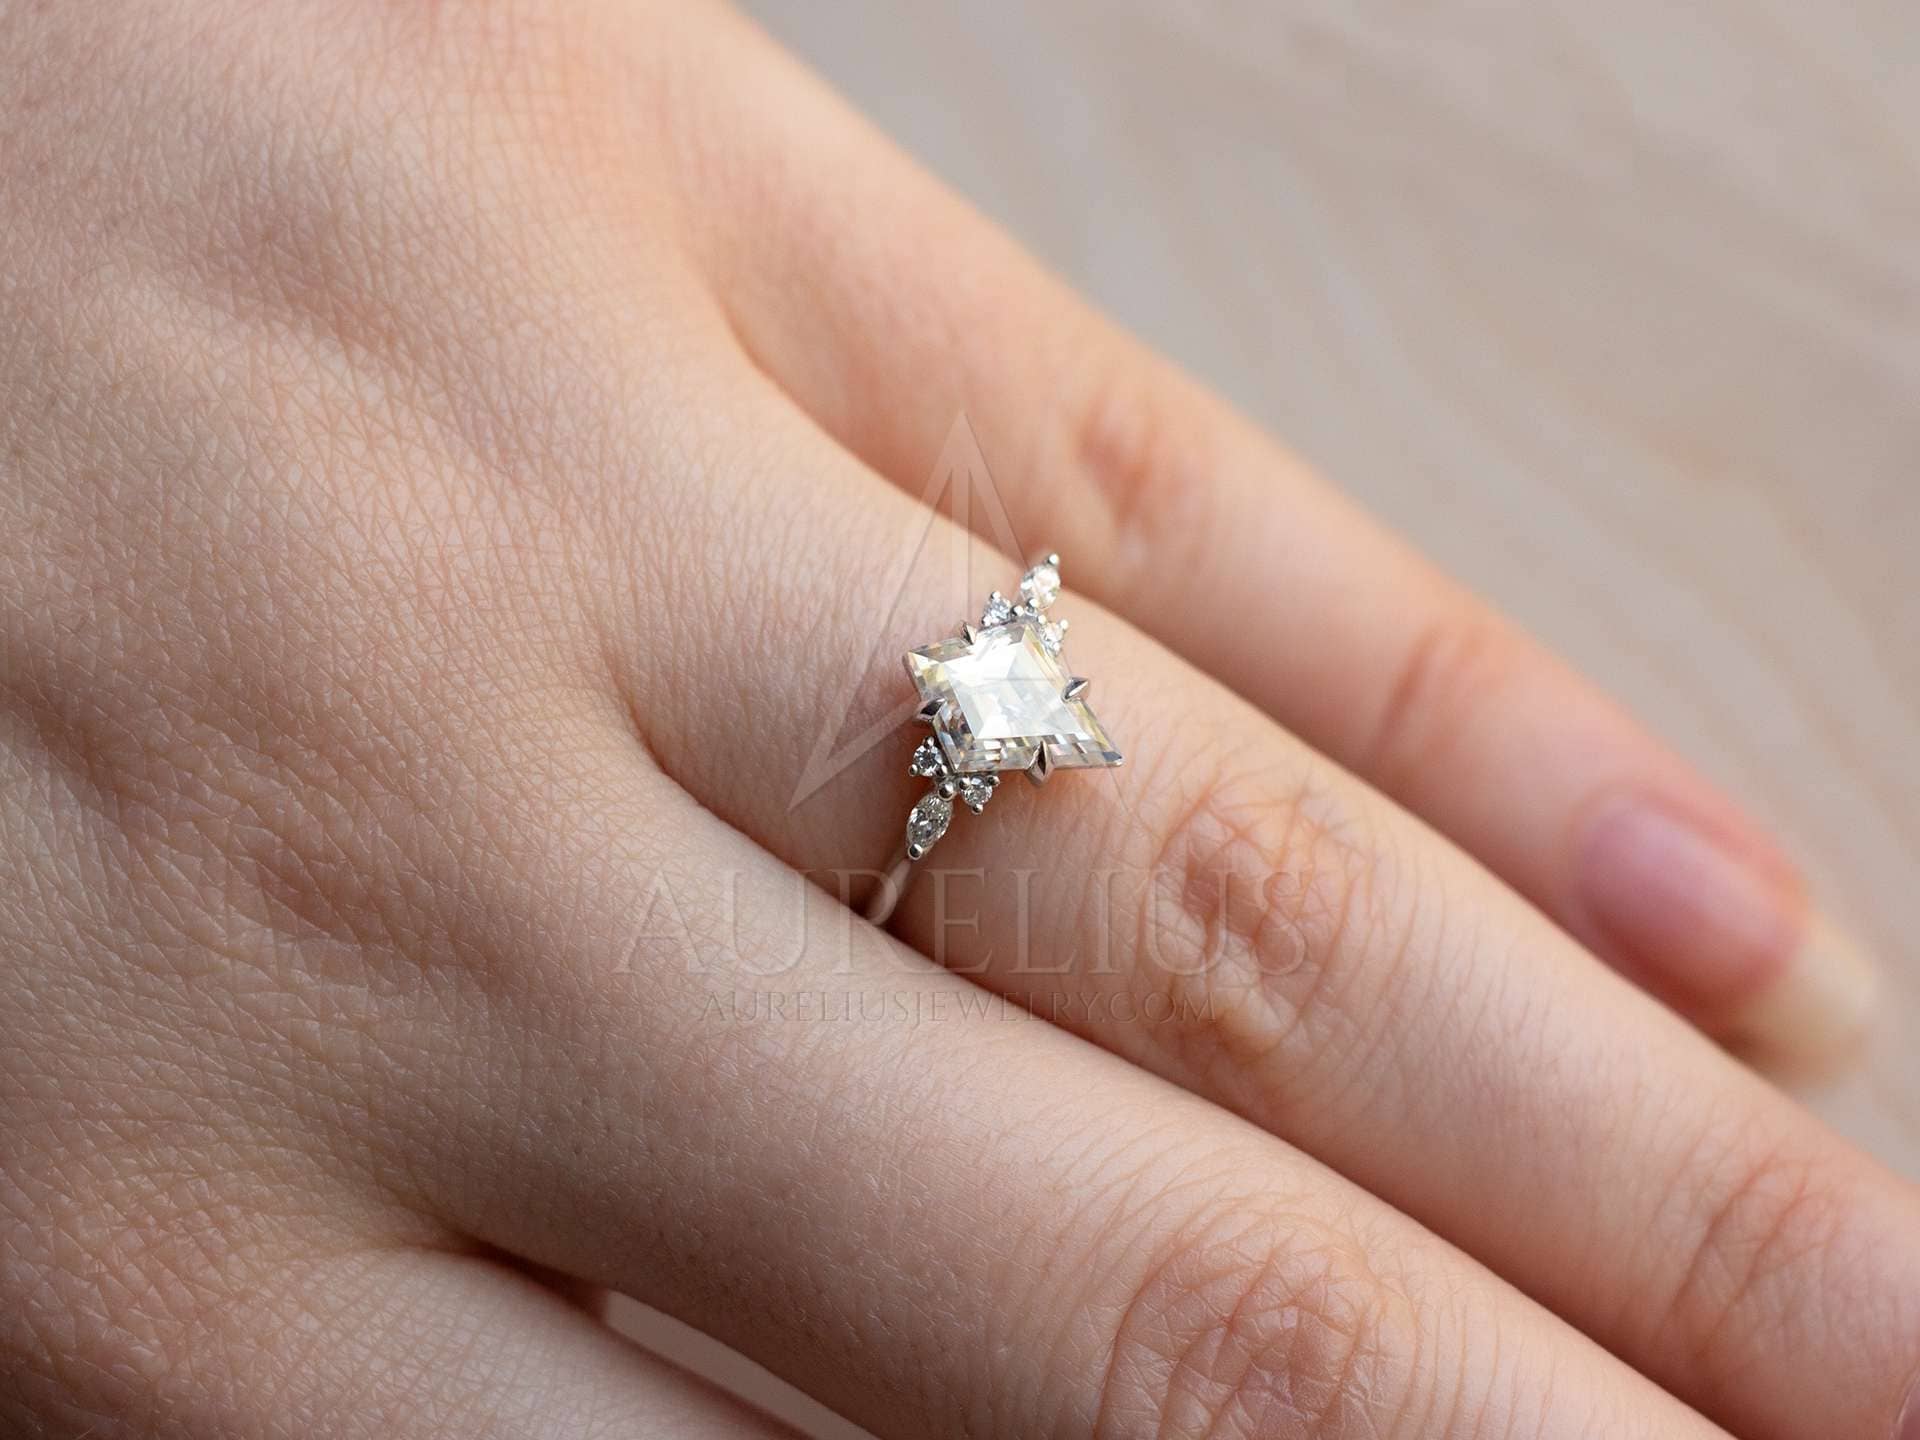 Details about   14k Gold Diamond Shape Kite Ring Tiny Round Cut Diamond Minimalist Wedding Band 